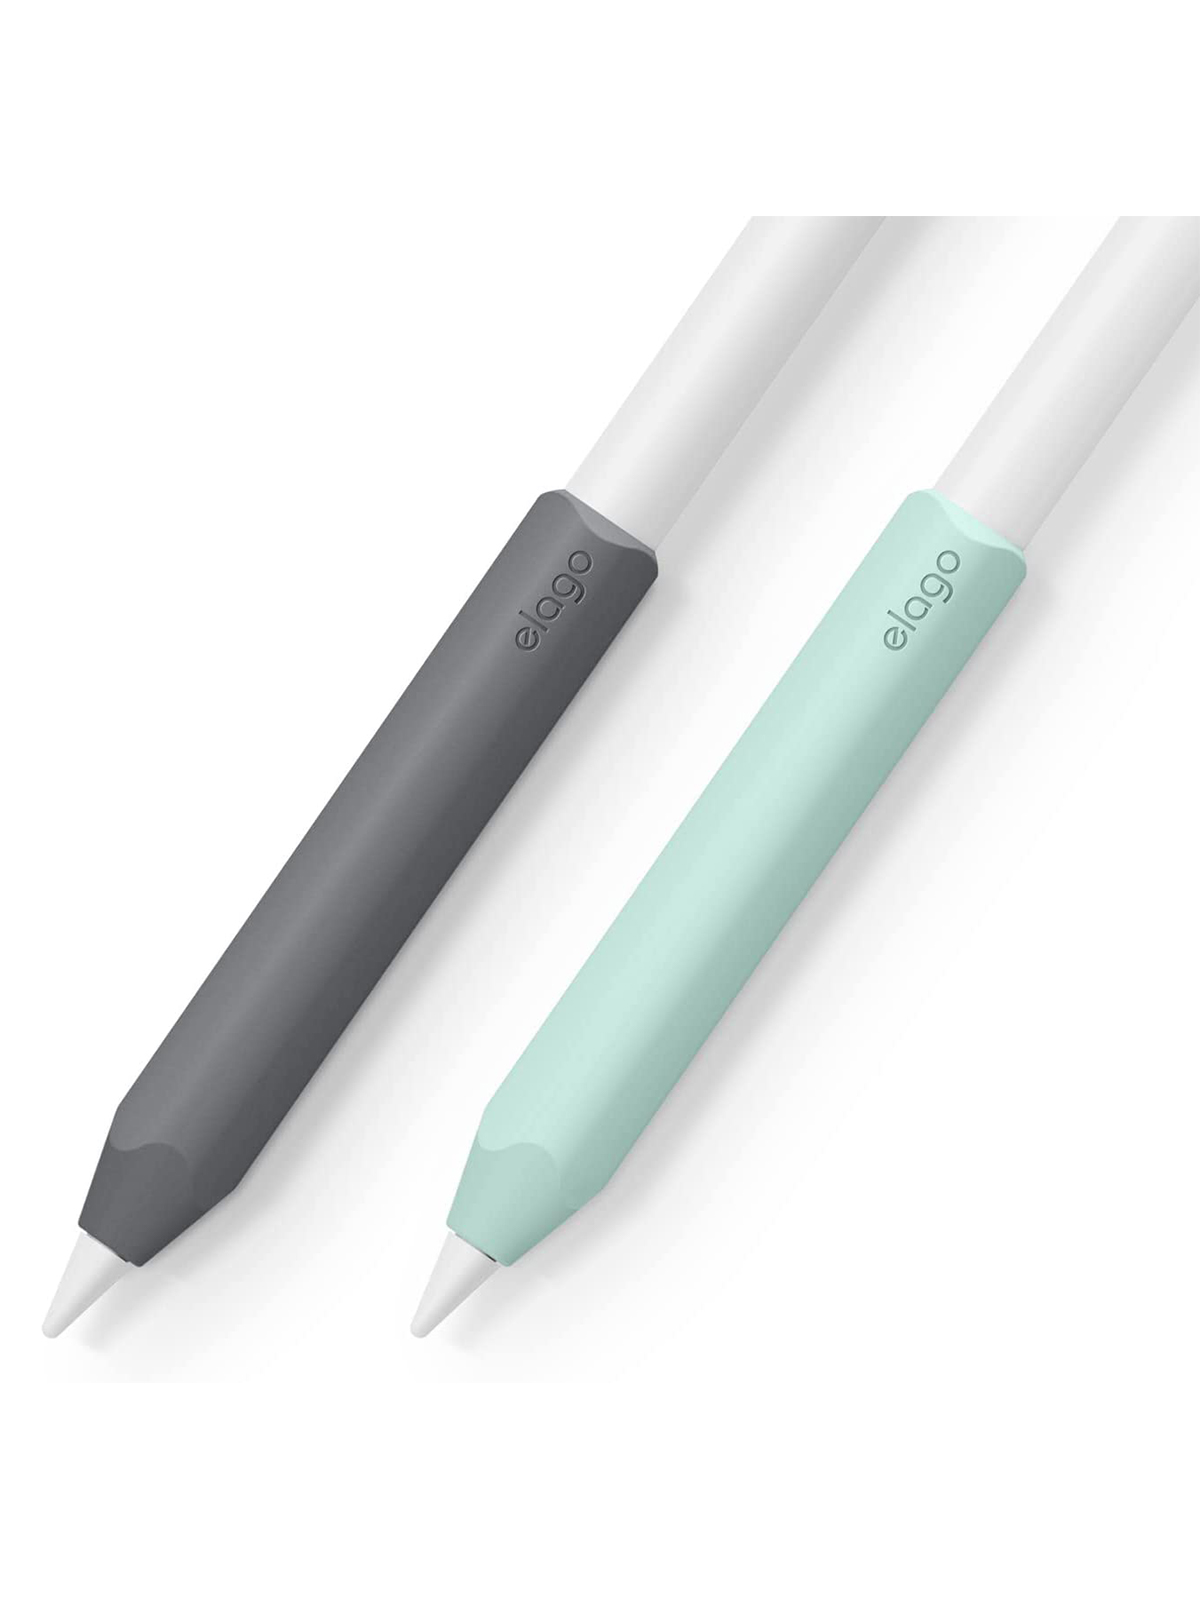 Чехол Elago для Apple Pencil 2 Grip silicone holder (2 шт.) Dark Grey/Mint